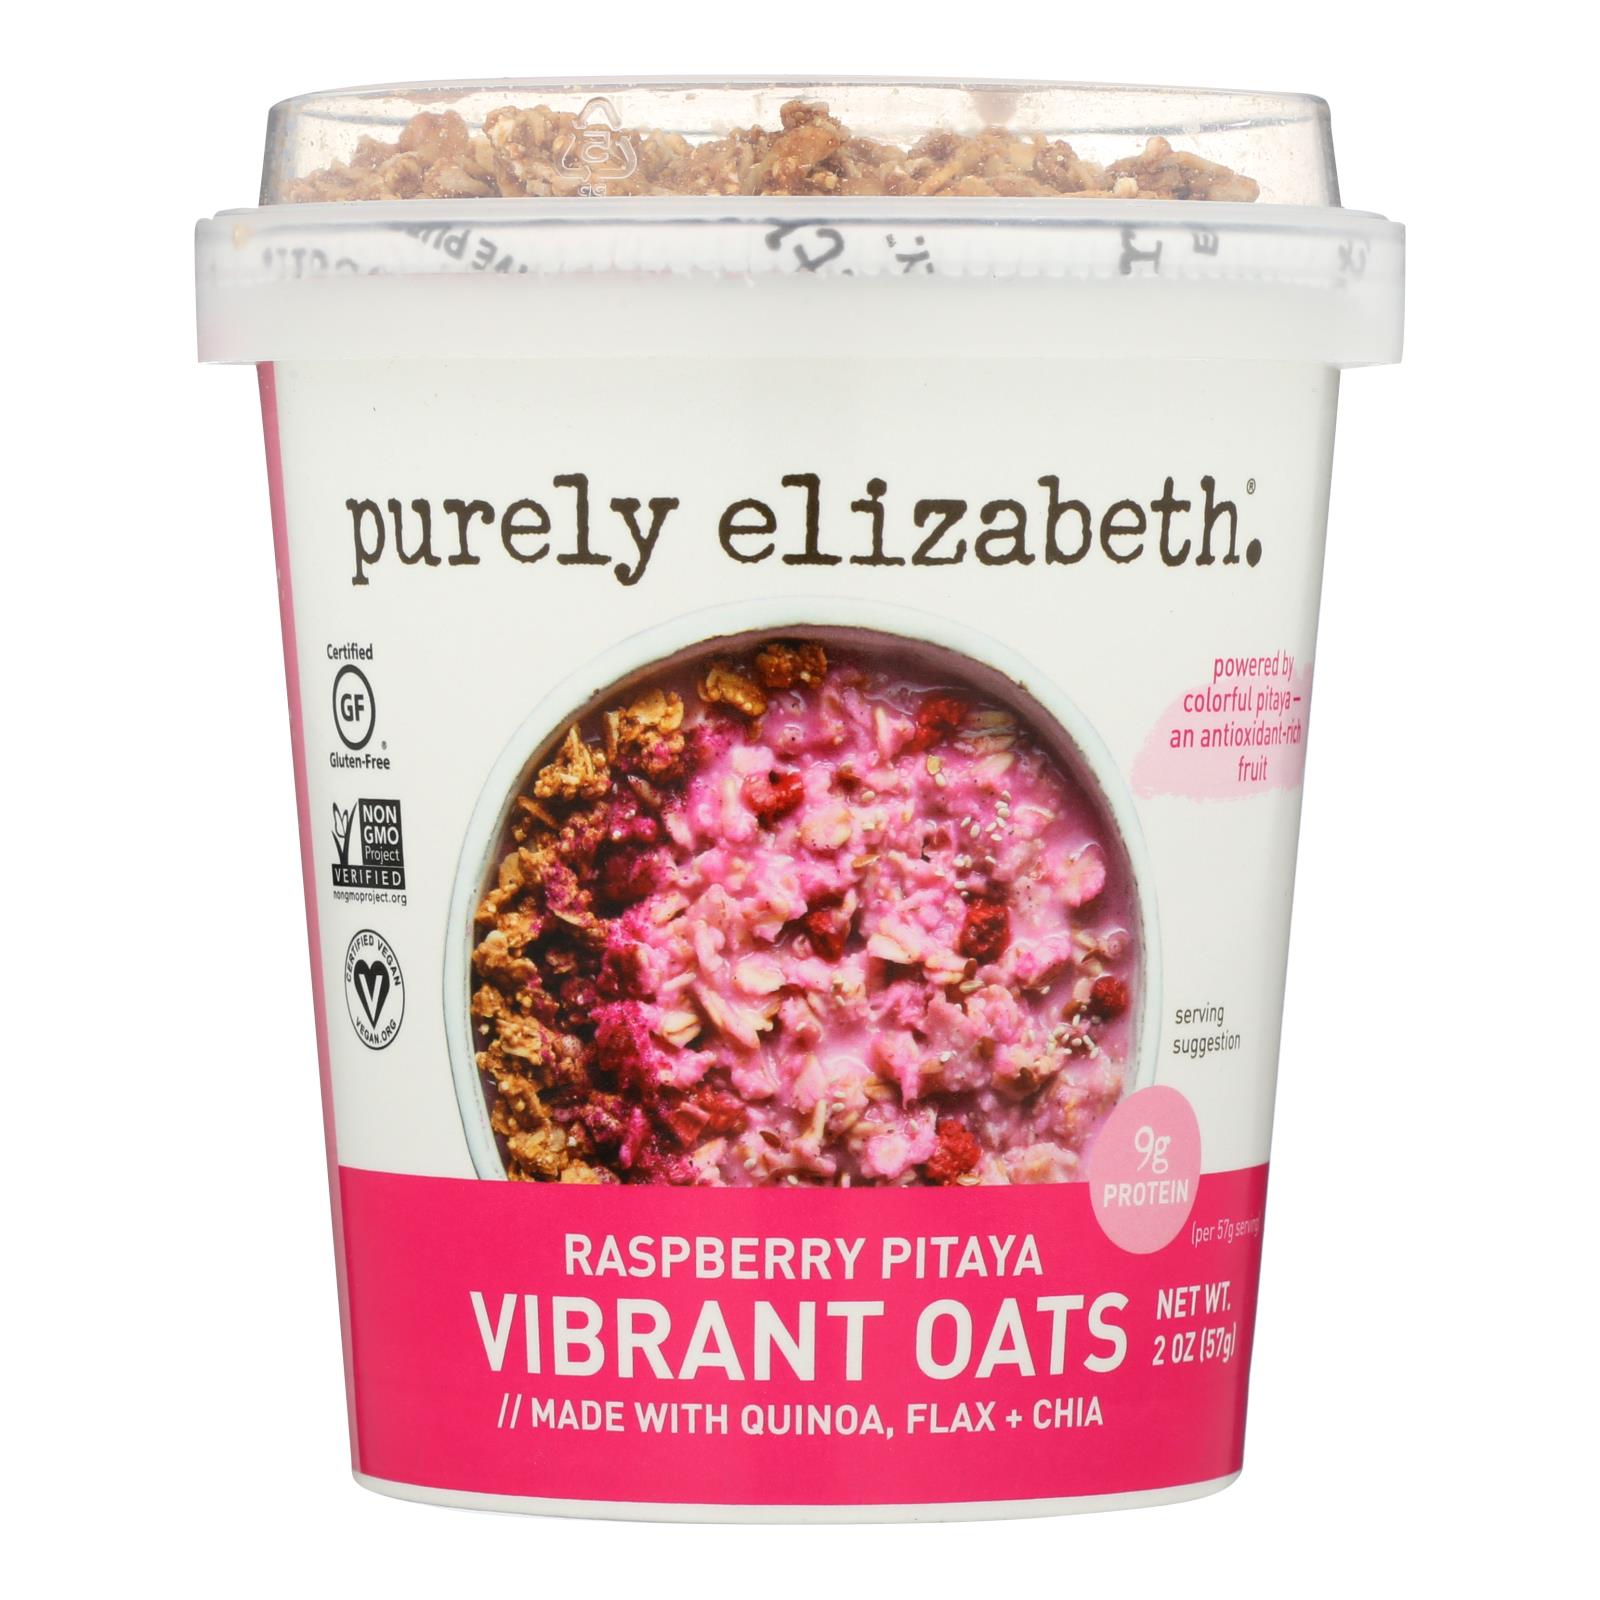 Purely Elizabeth - Vibrnt Oats Raspberry Pitaya - 12개 묶음상품 - 2 OZ